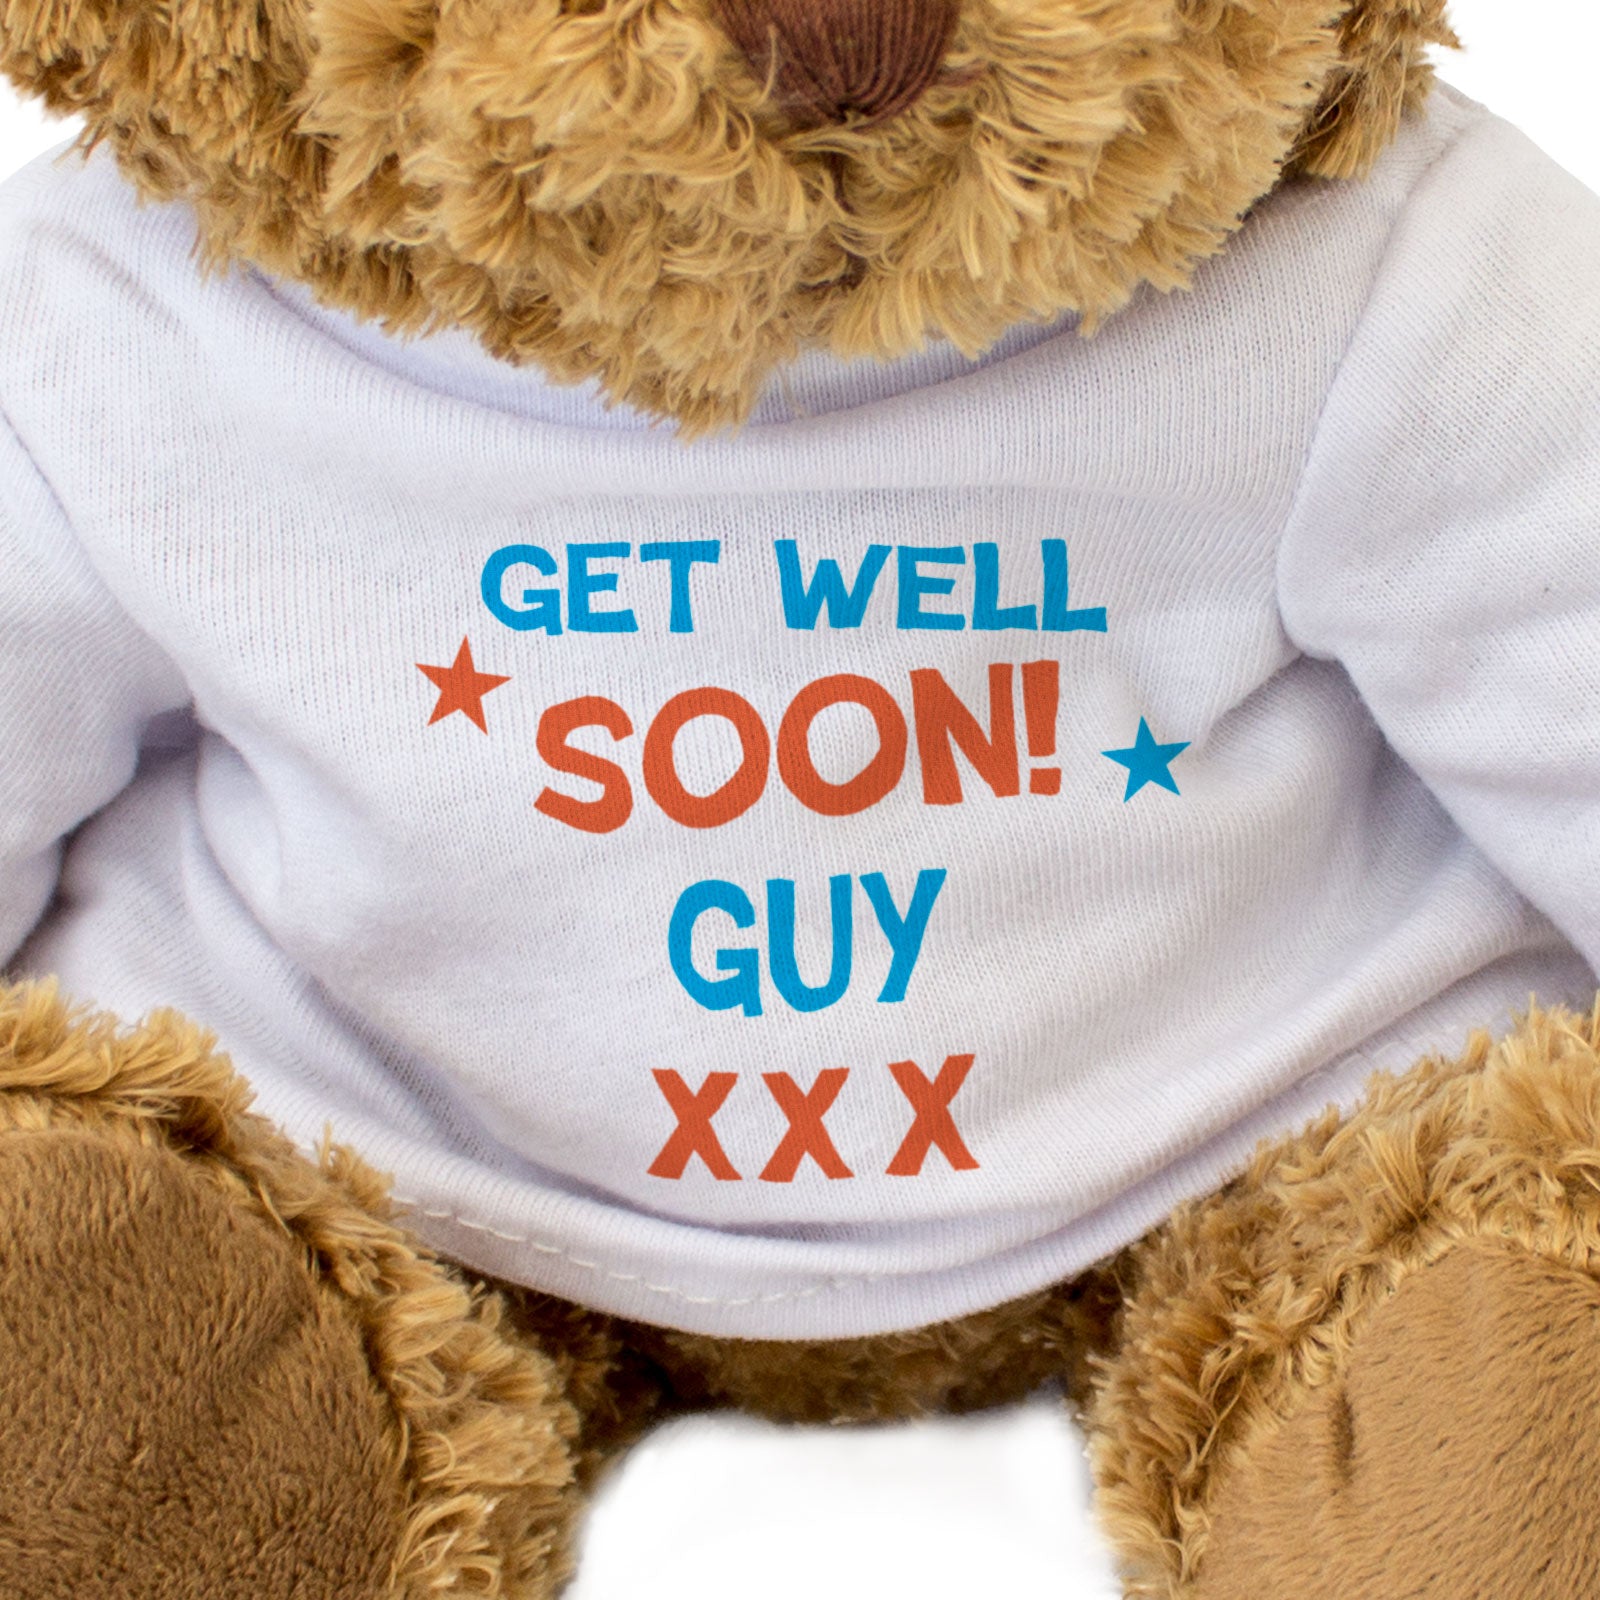 Get Well Soon Guy - Teddy Bear